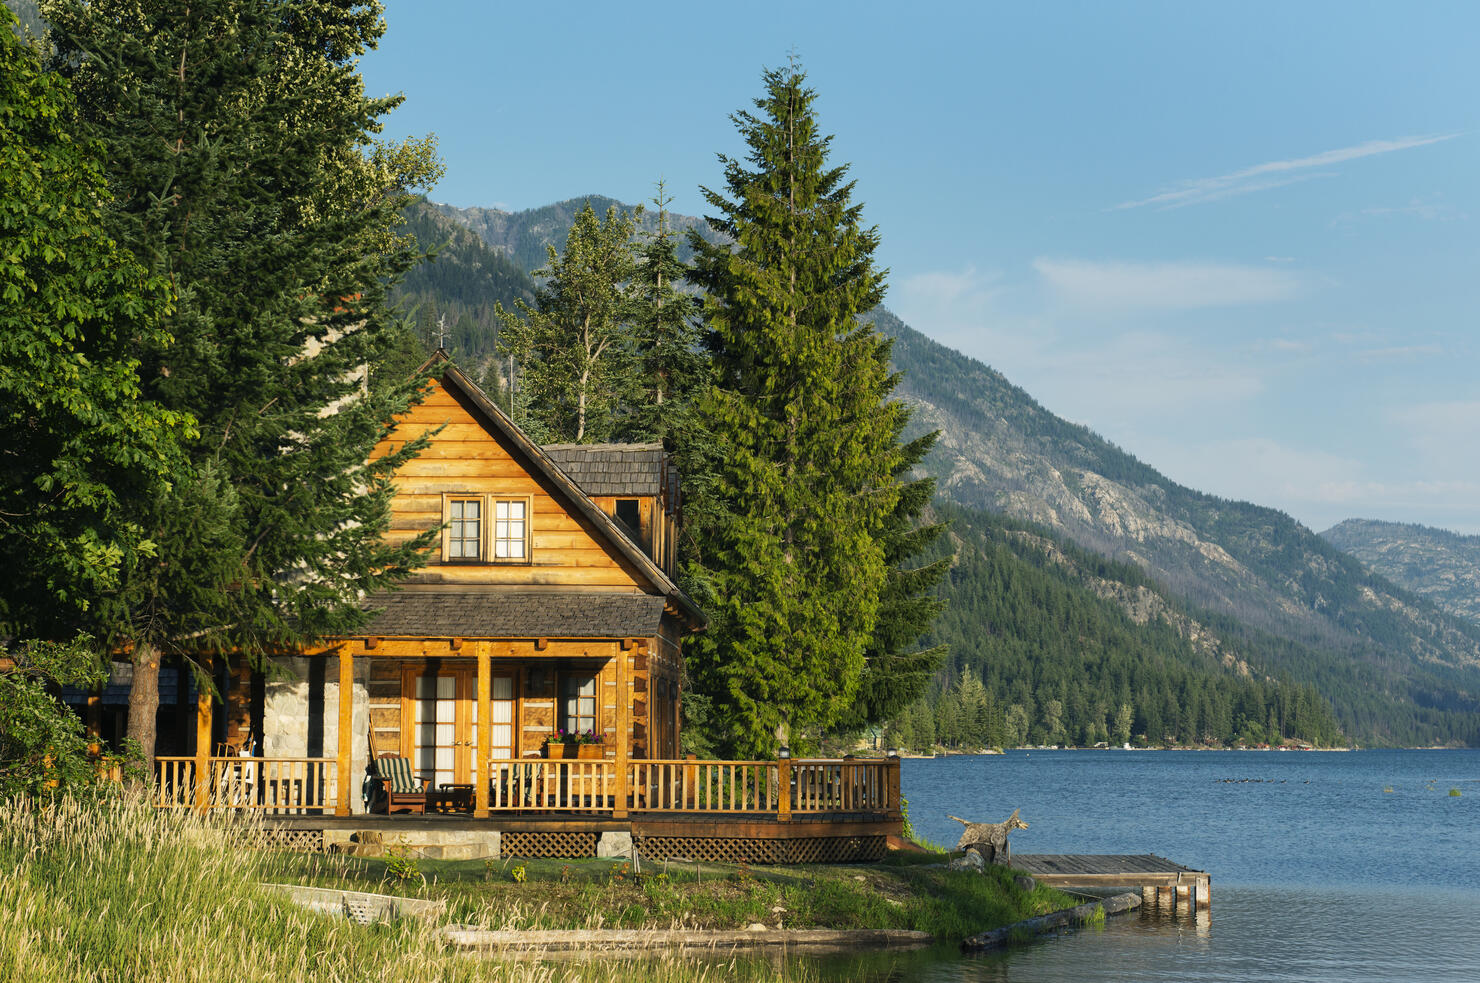 Cabin on shore, Stehekin, Lake Chelan, North Cascade Mountains, Washington USA